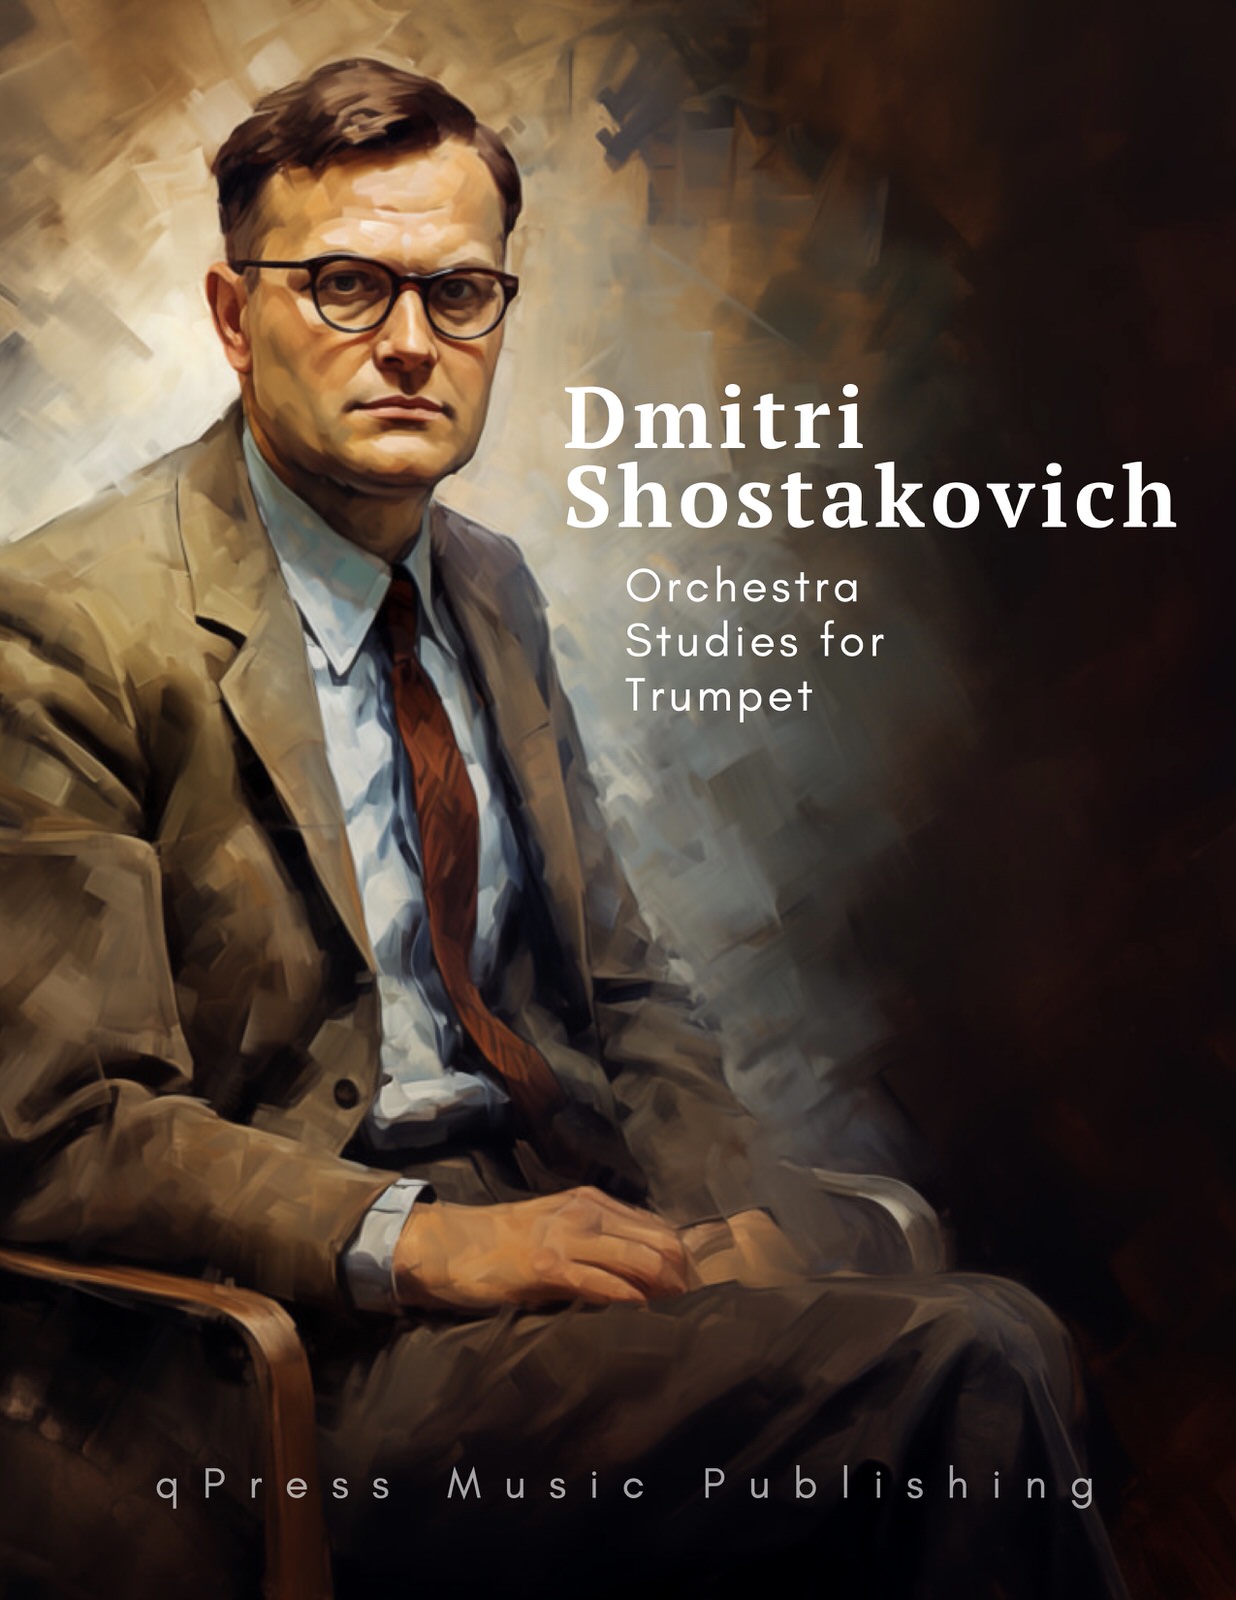 Dmitri　Shostakovich　by　Shostakovich,　Trumpet:　Orchestra　for　Studies　qPress